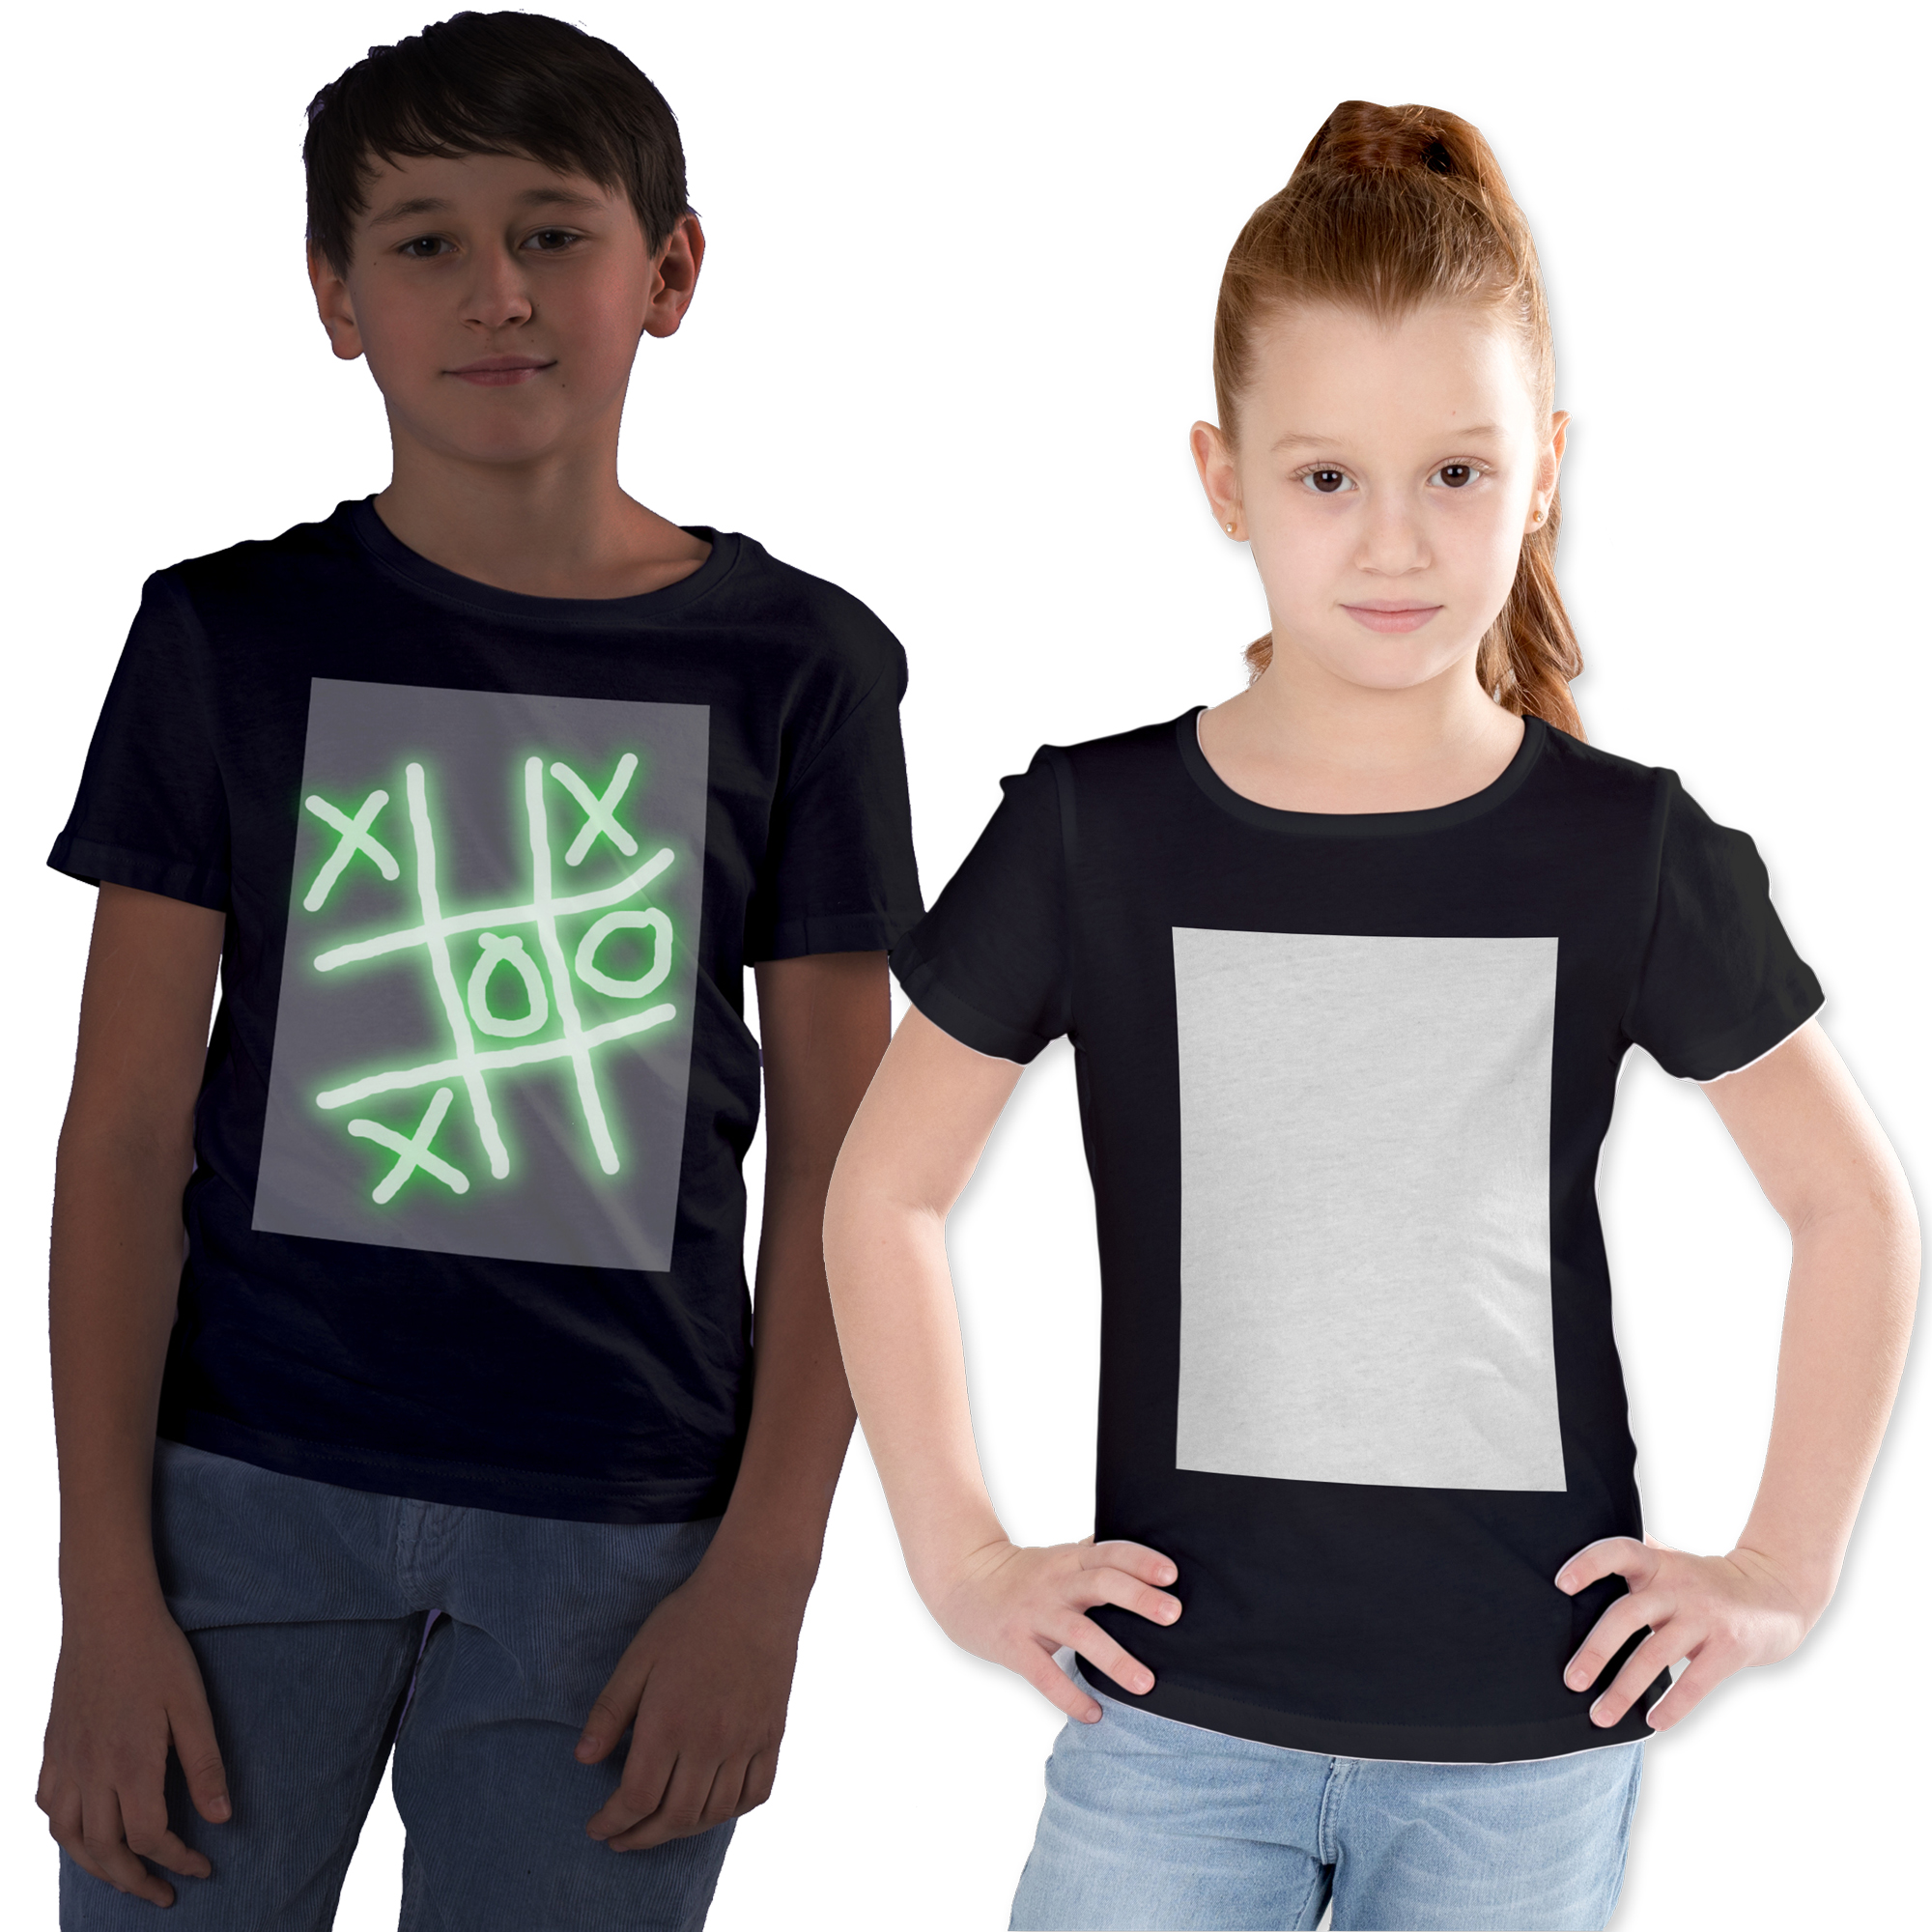 interactive Glow in the dark t-shirts